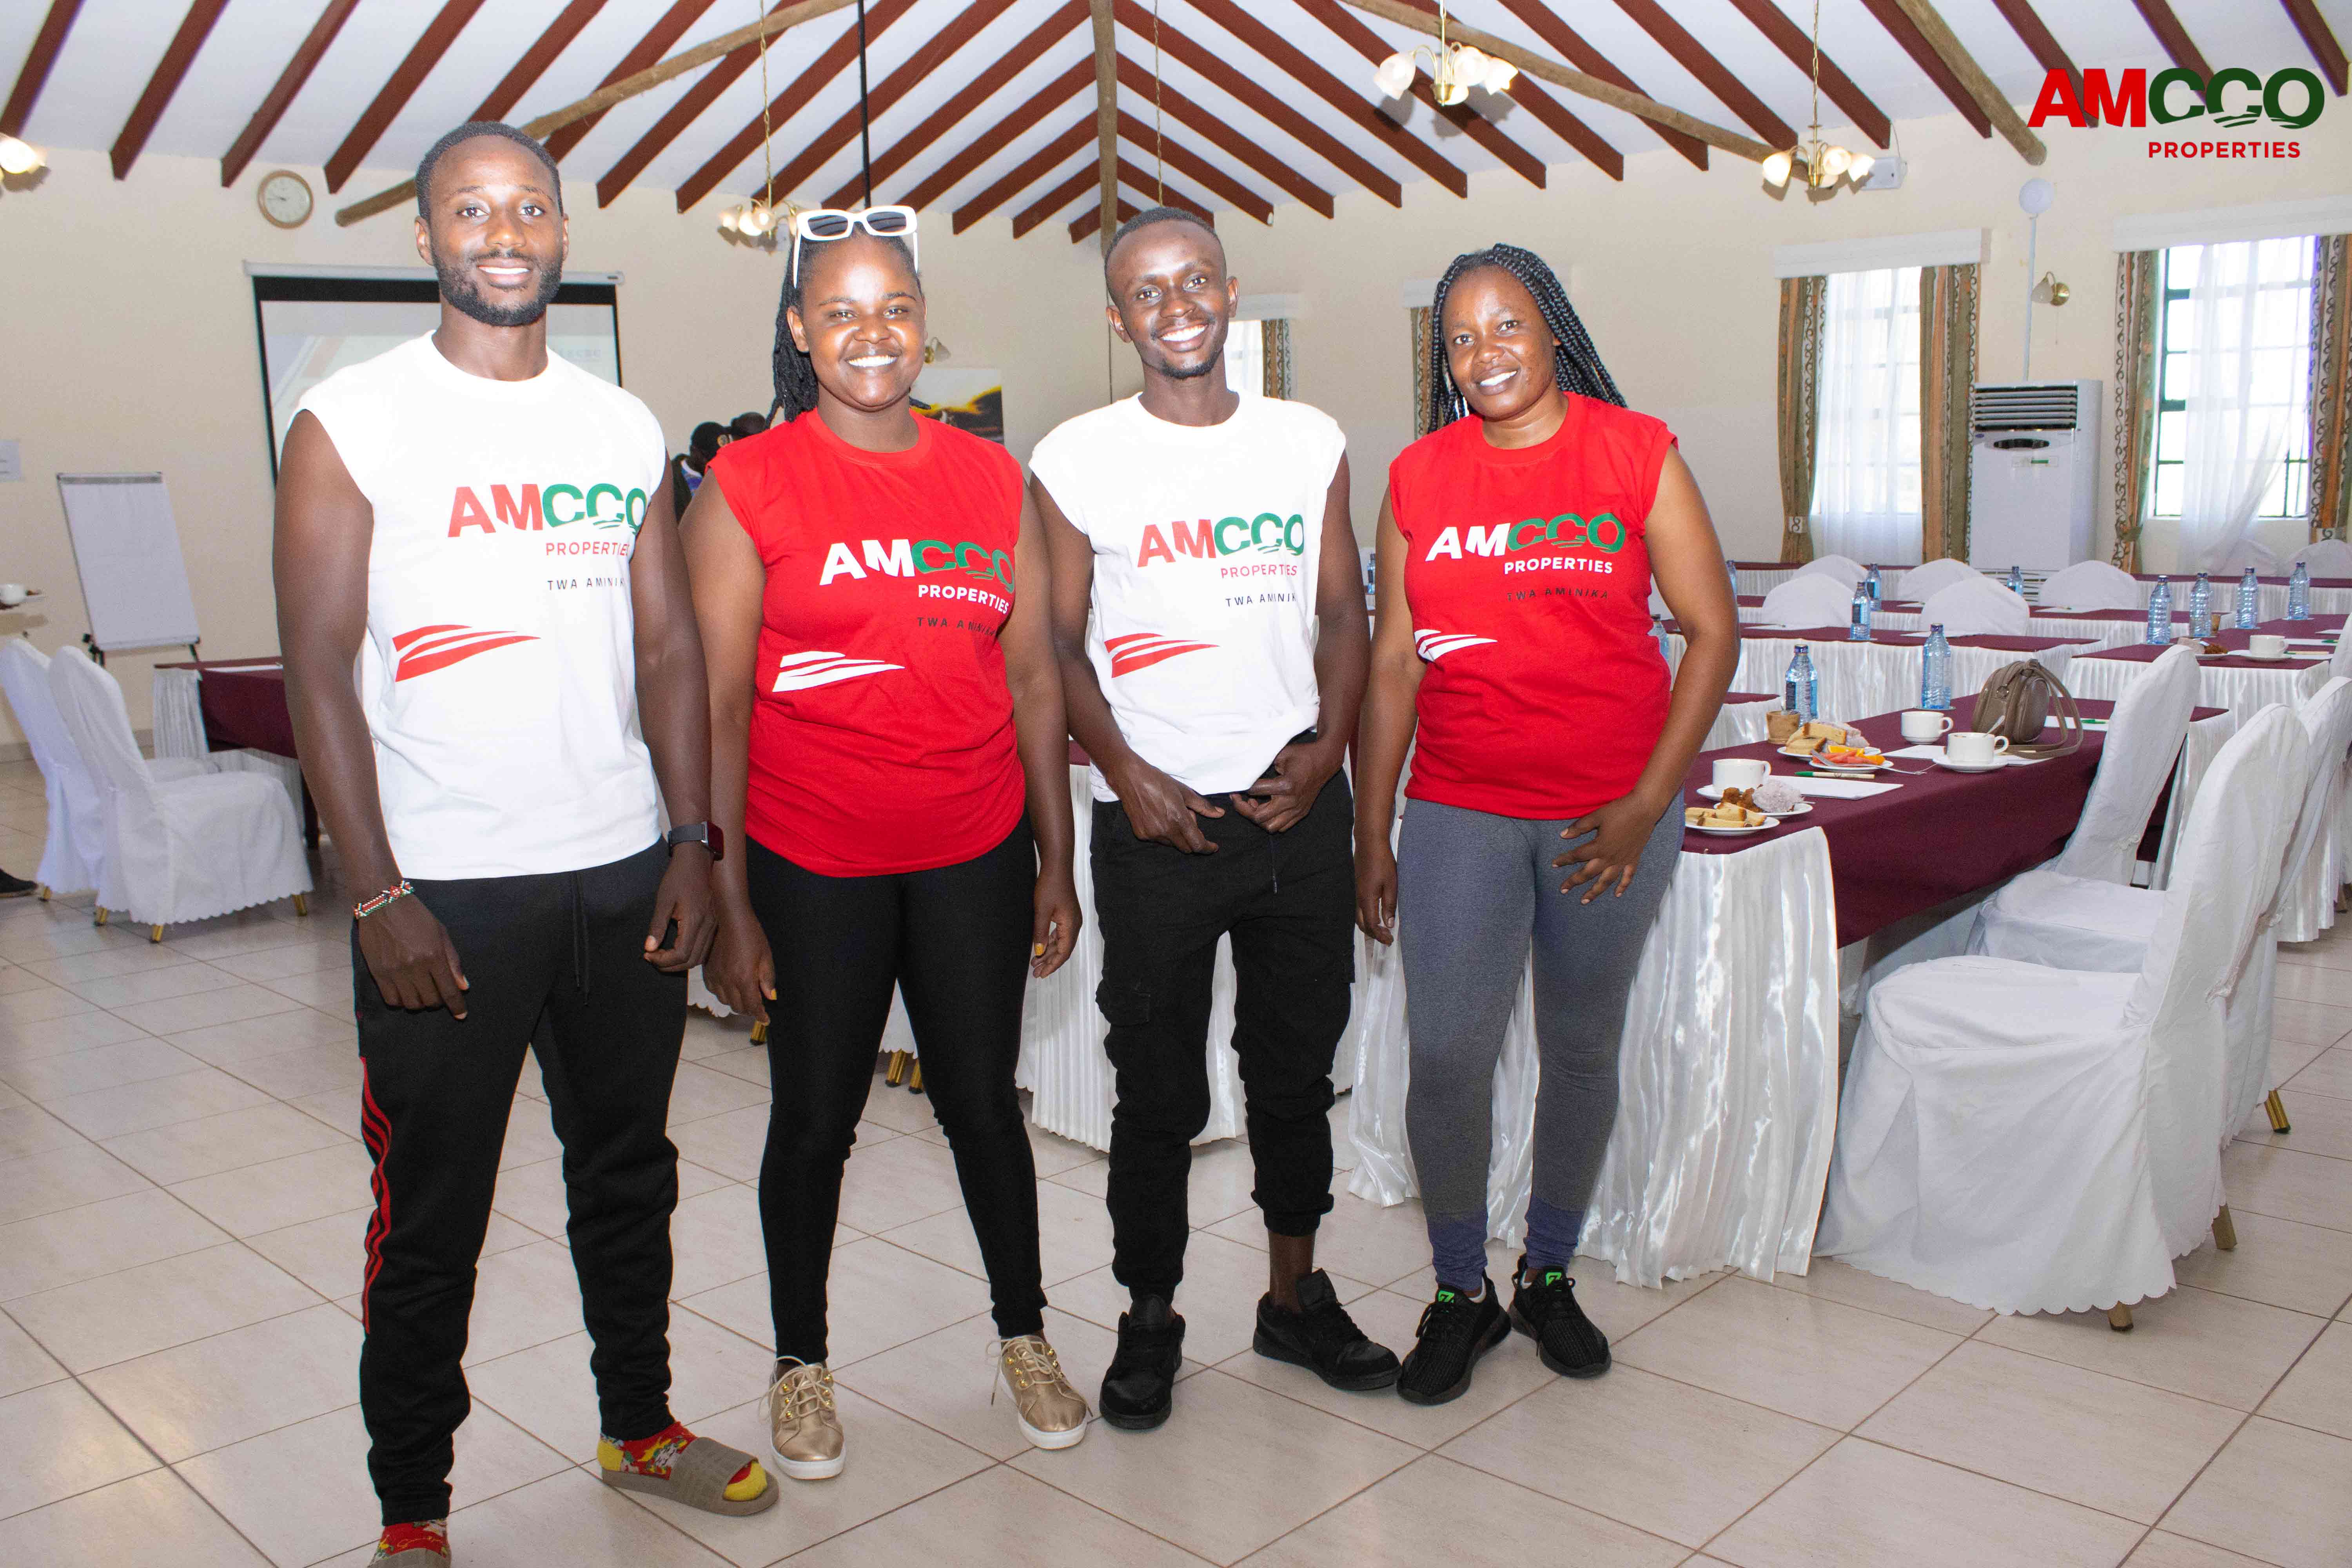 Amcco properties team